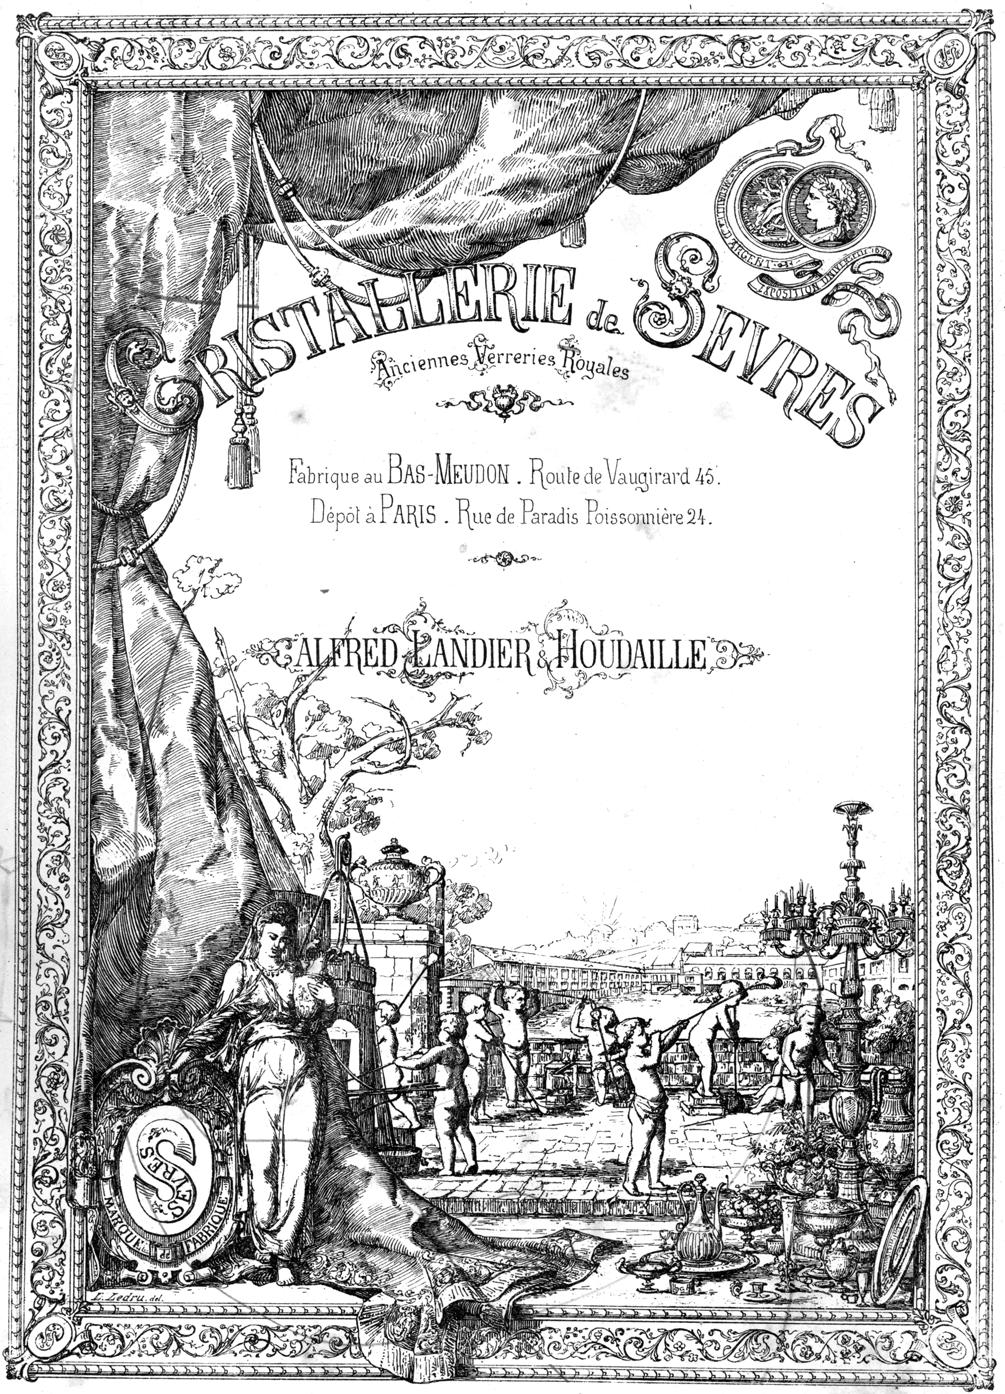 Abb. 2006-3-01/002 (Ausschnitt) MB Sèvres 1880, Titelblatt, Landschaft mit Putten als Glasbläser, Louis-Léon Ledru, heute im Musée des Arts décoratifs, Paris in der Ecke links unten, unter der Marke: